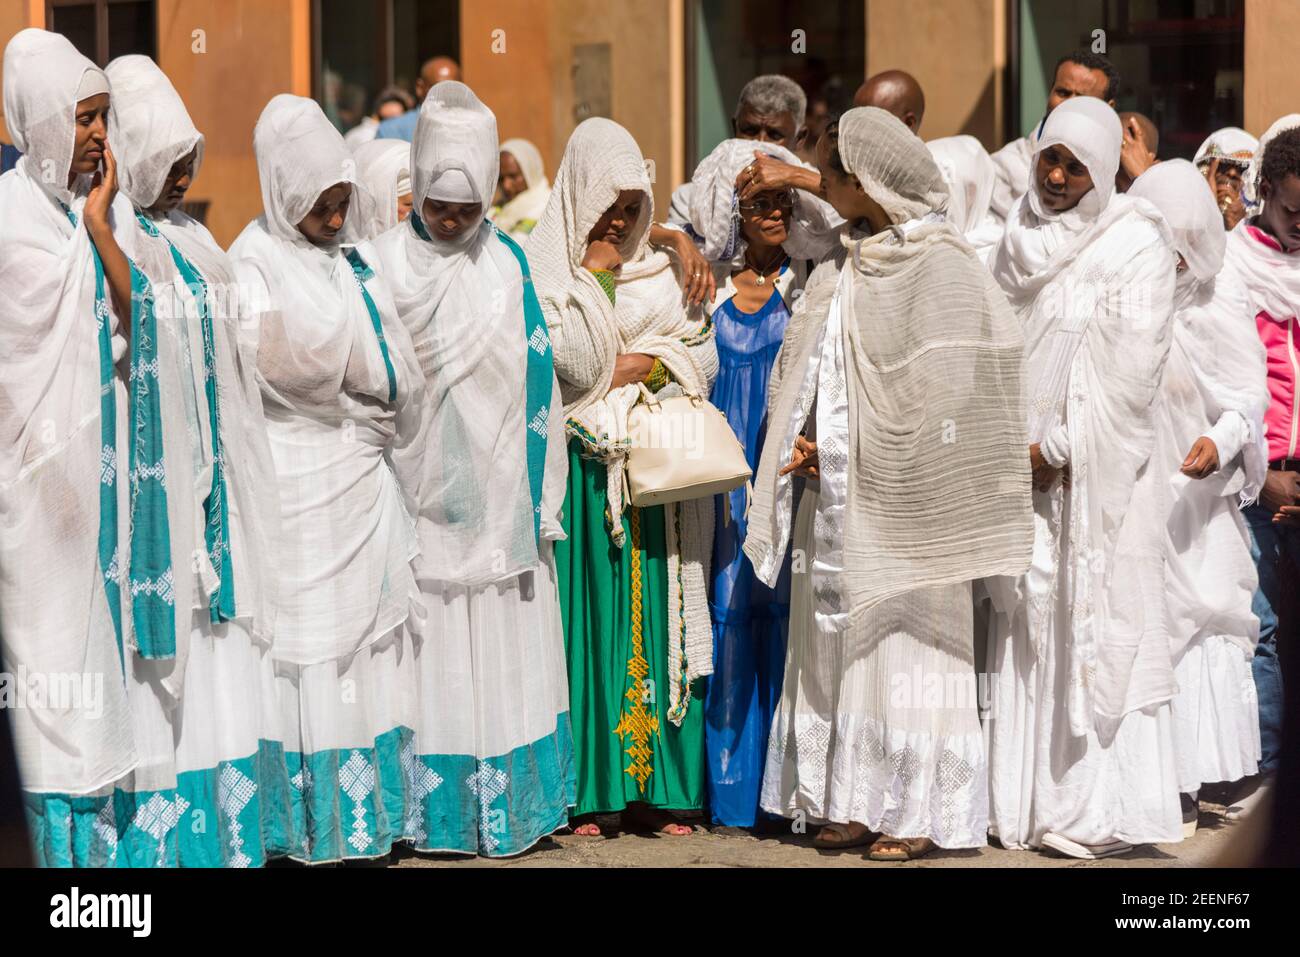 Woman festival eritrean people in -Fotos und -Bildmaterial in hoher  Auflösung – Alamy